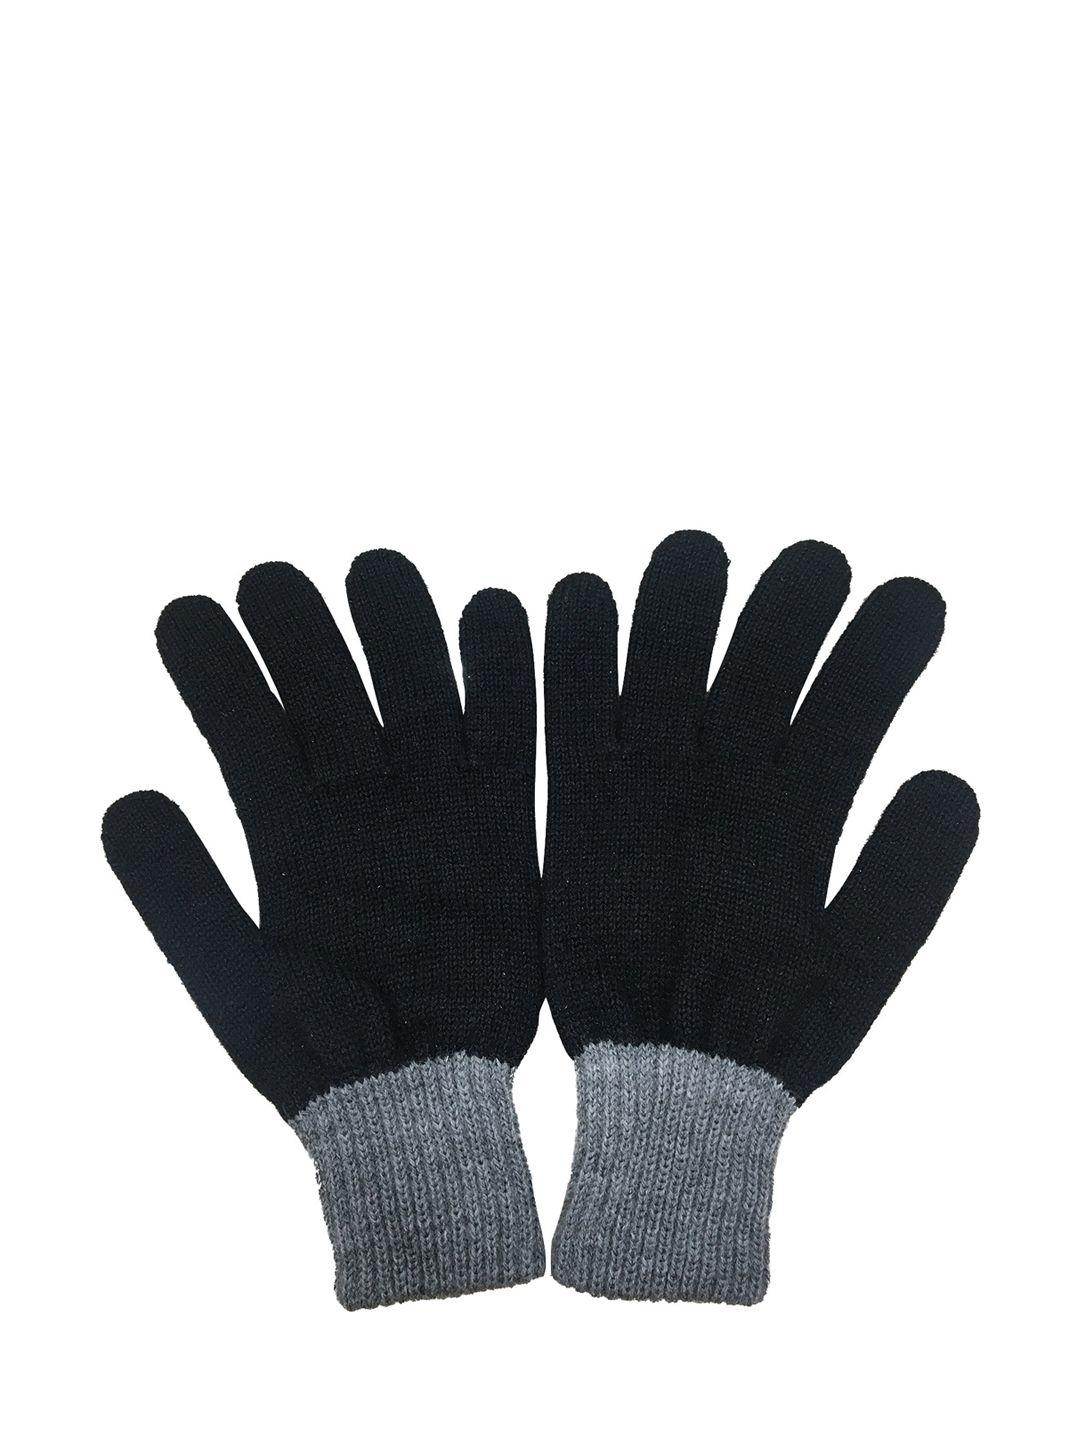 gajraj men black & grey winter woolen gloves